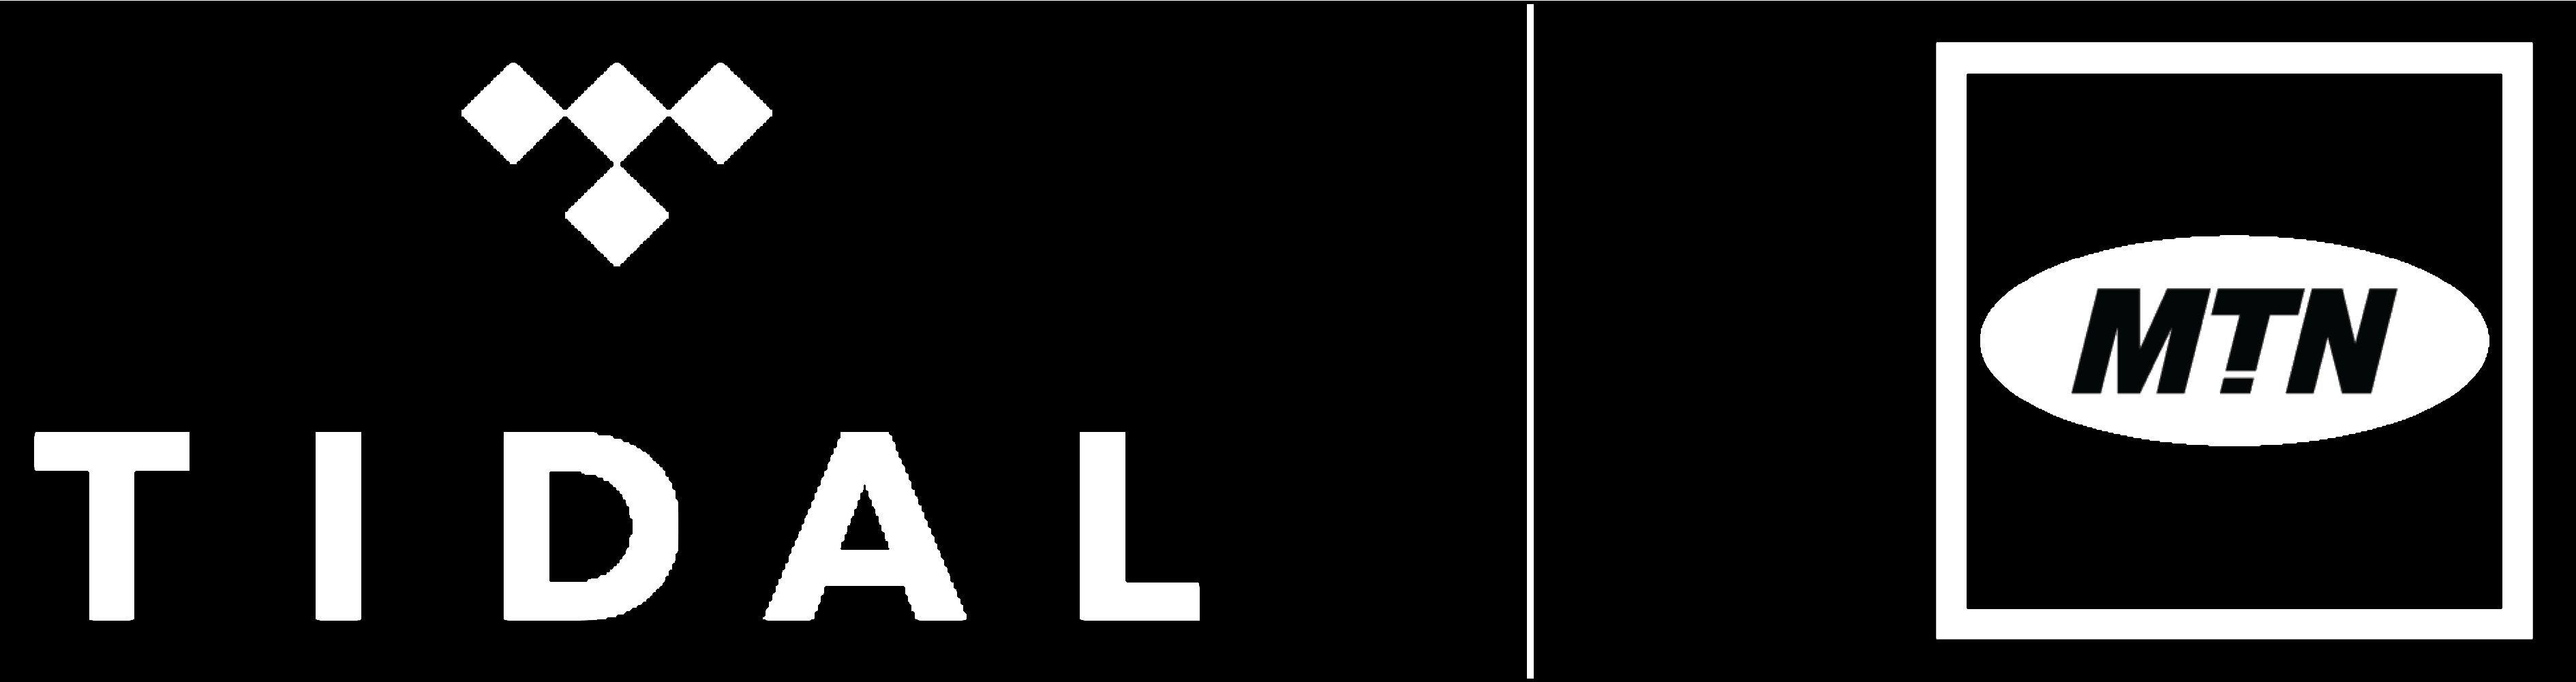 black tidal logo png